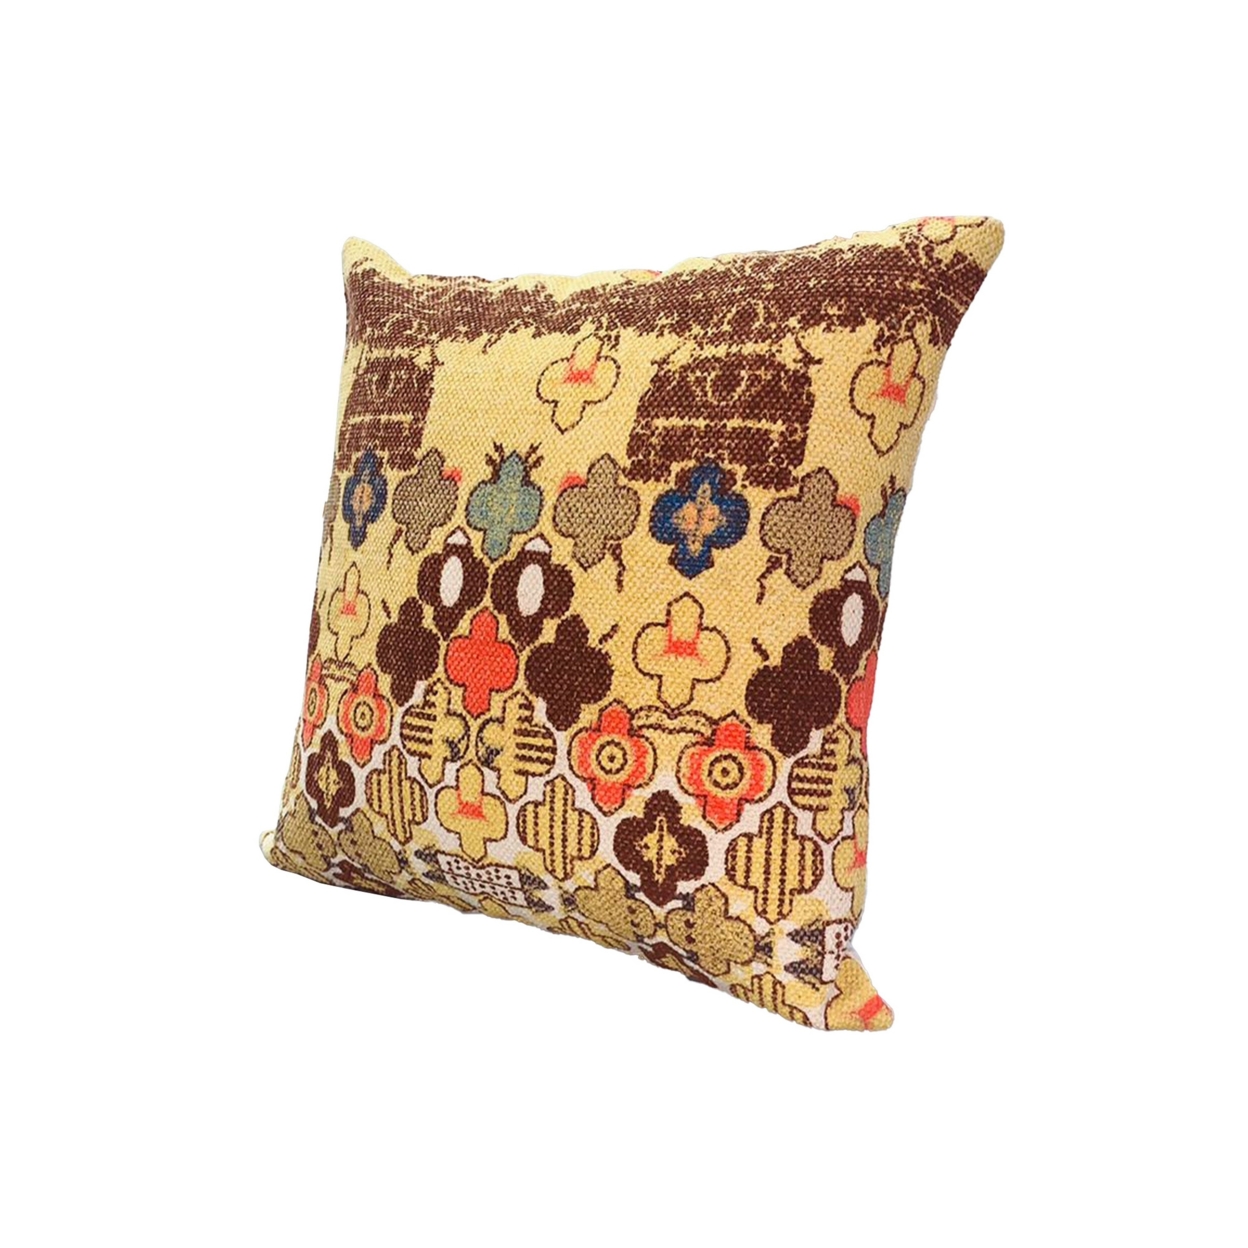 18 X 18 Square Accent Pillow, Printed Unique Quatrefoil Design, Polyester Filler, Brown, Orange, Yellow- Saltoro Sherpi